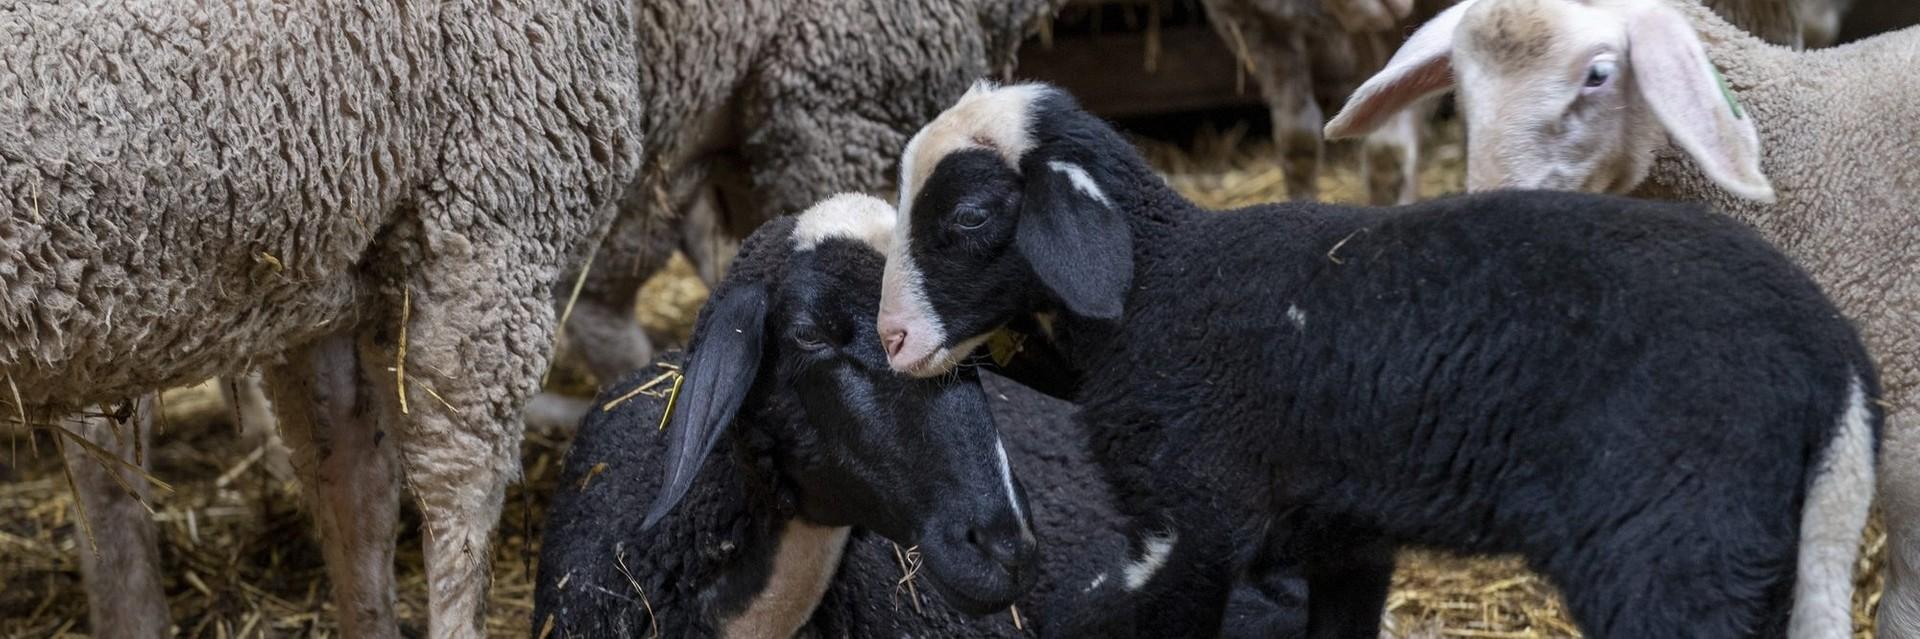 Two black sheep inside a barn